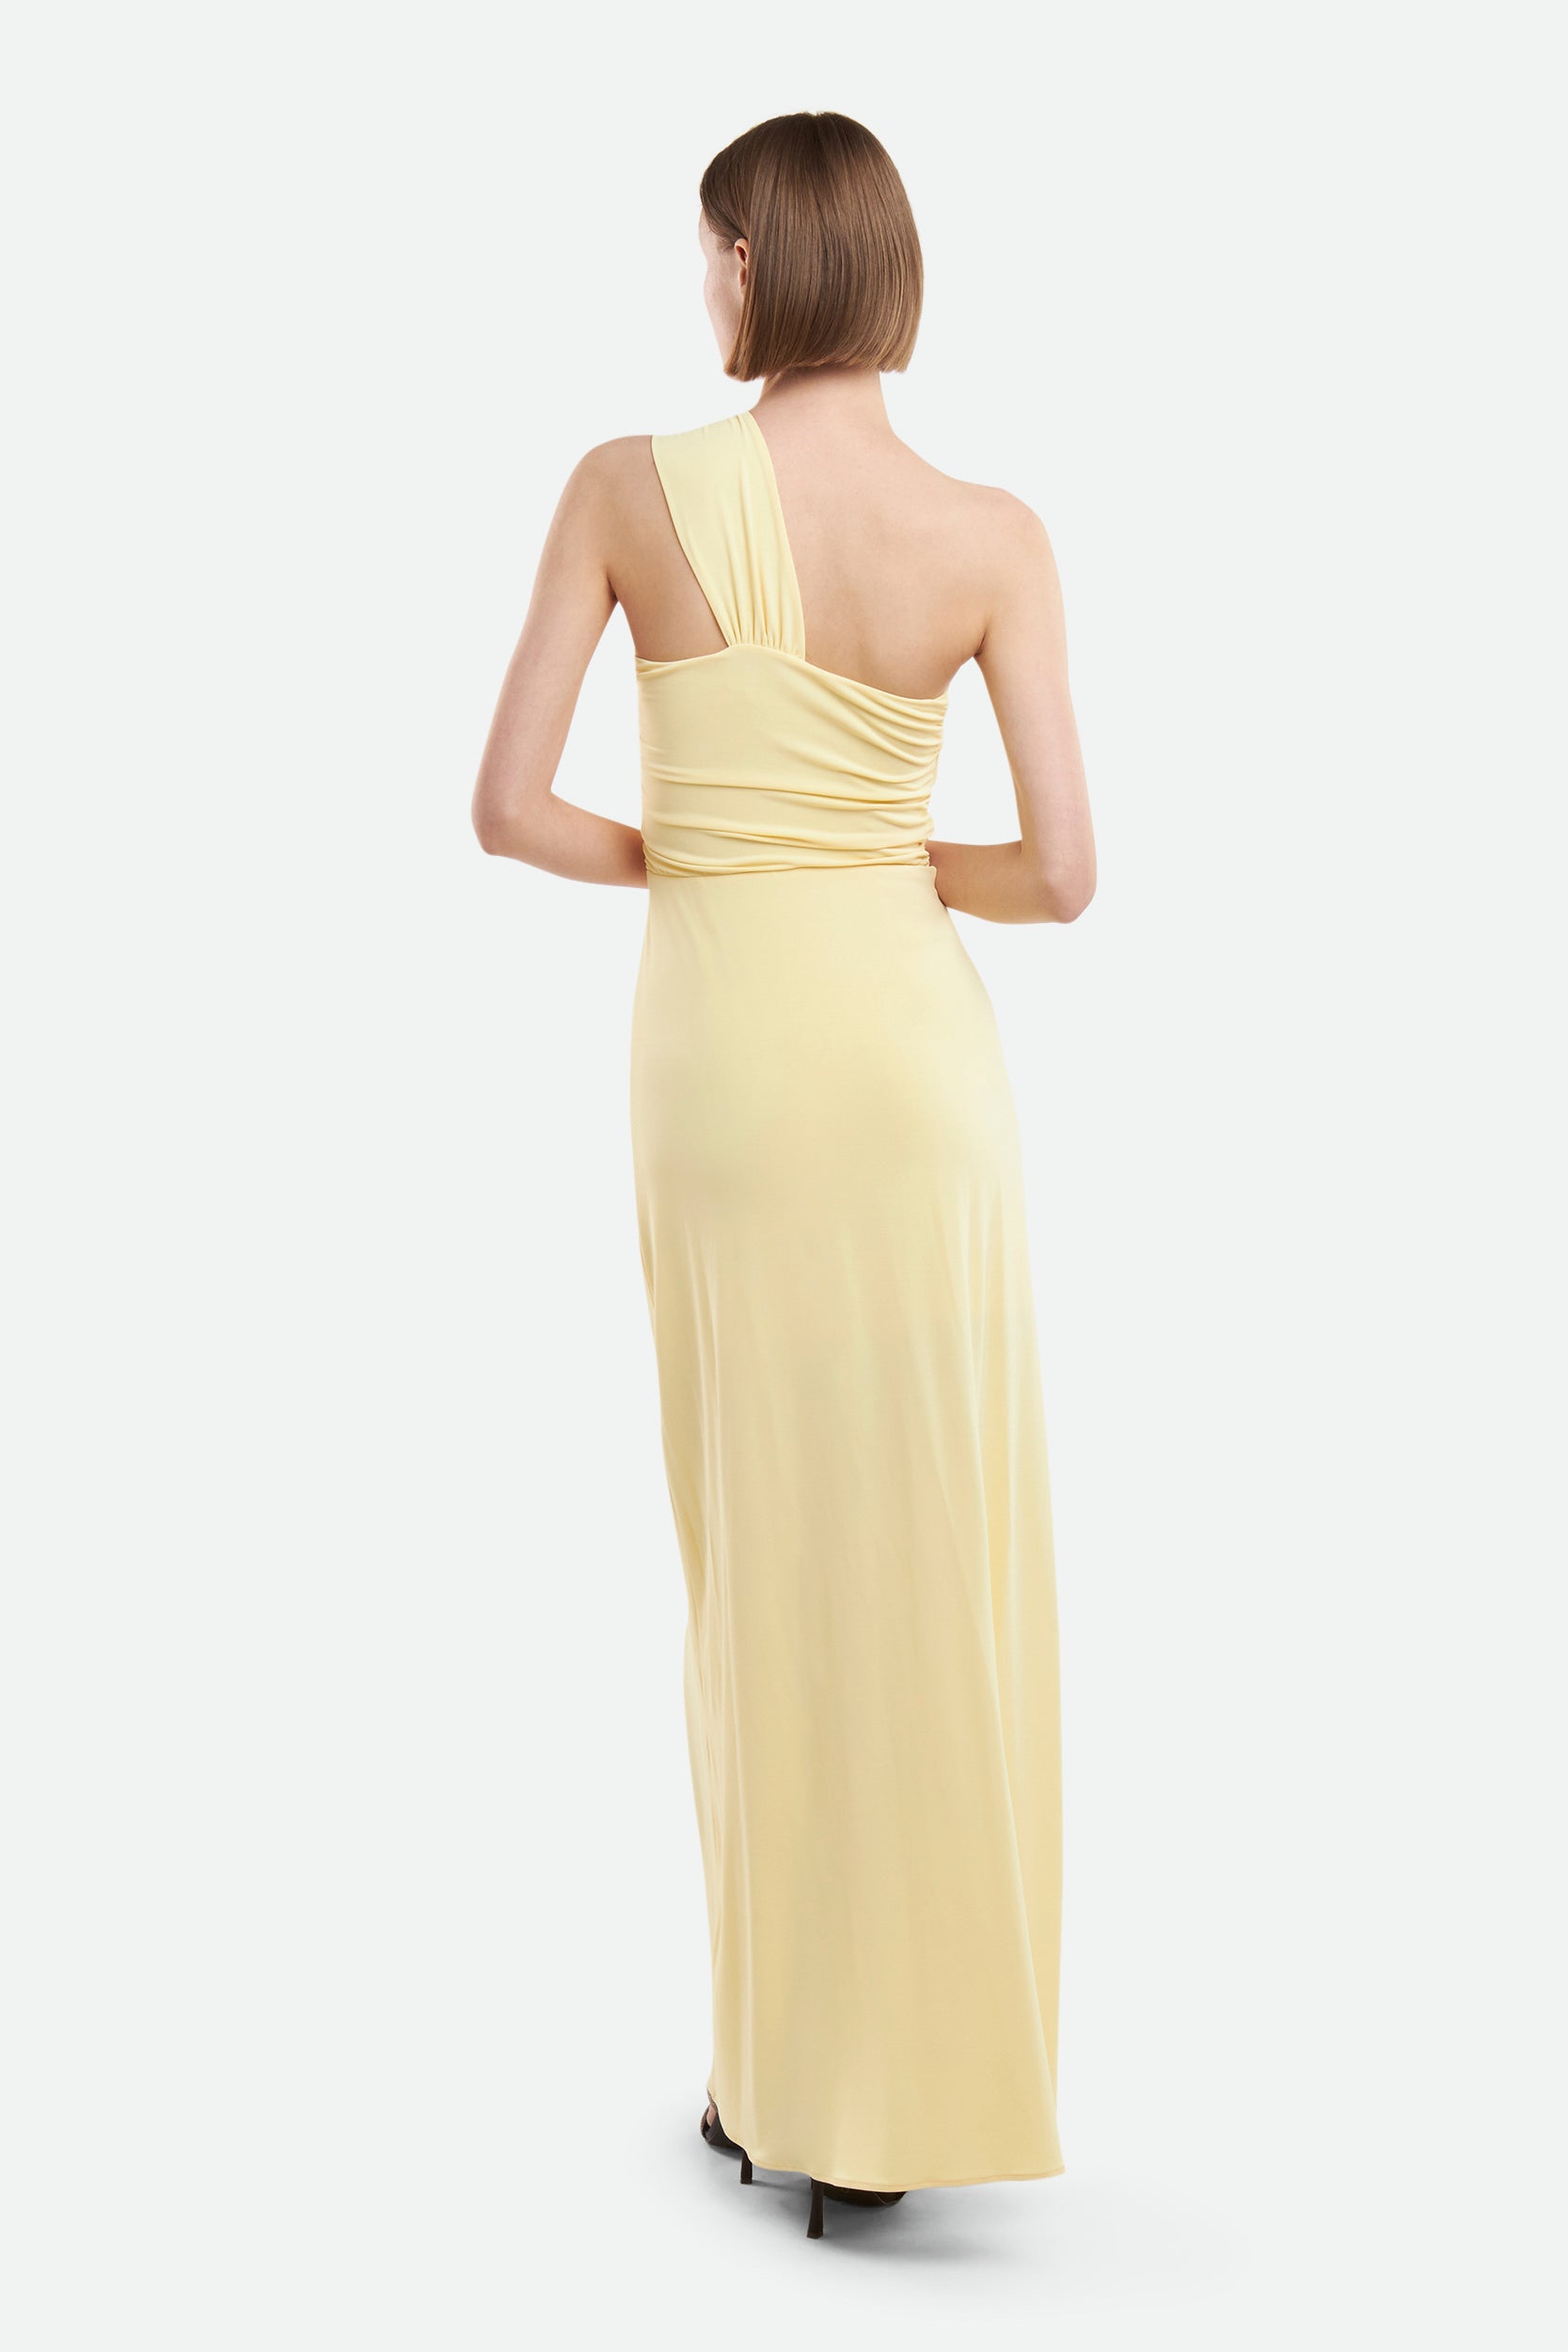 Patrizia Pepe Long Yellow Dress